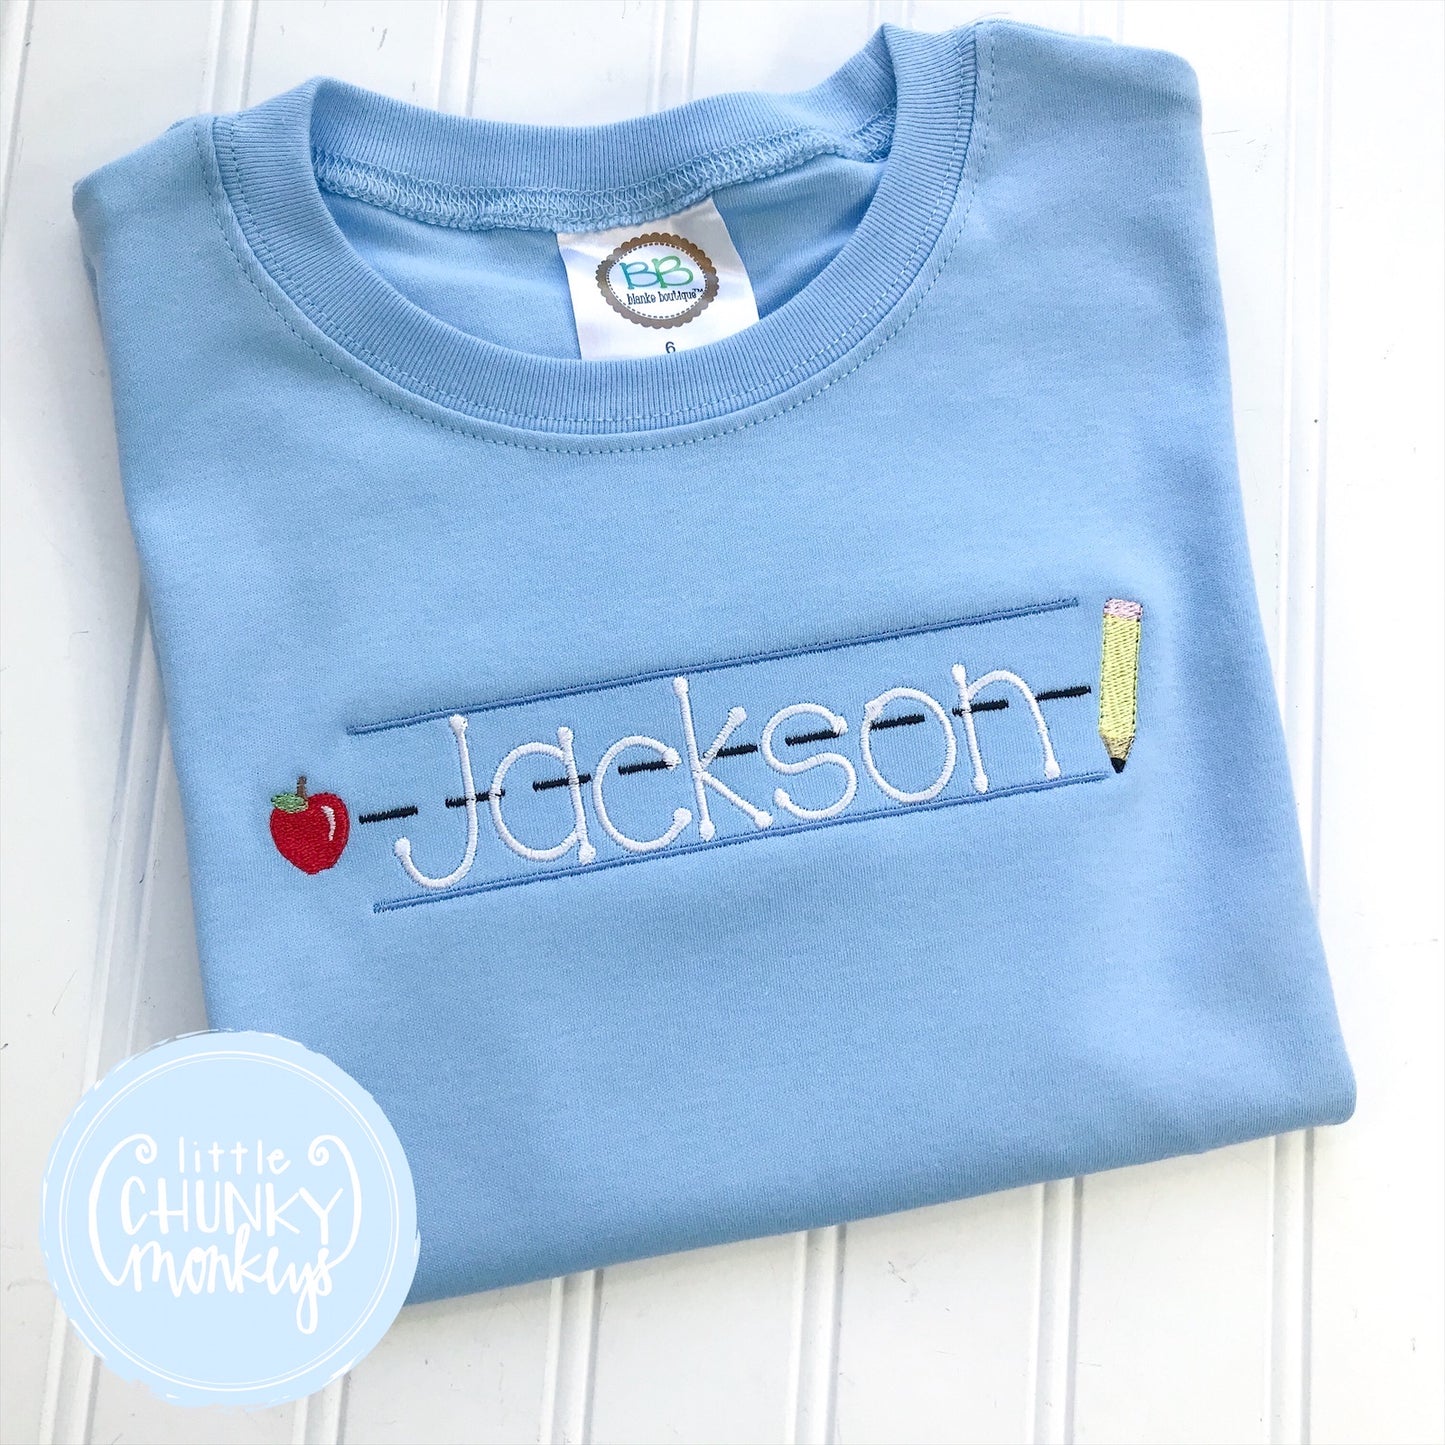 Boy Shirt - Embroidered Back to School on Light Blue Shirt